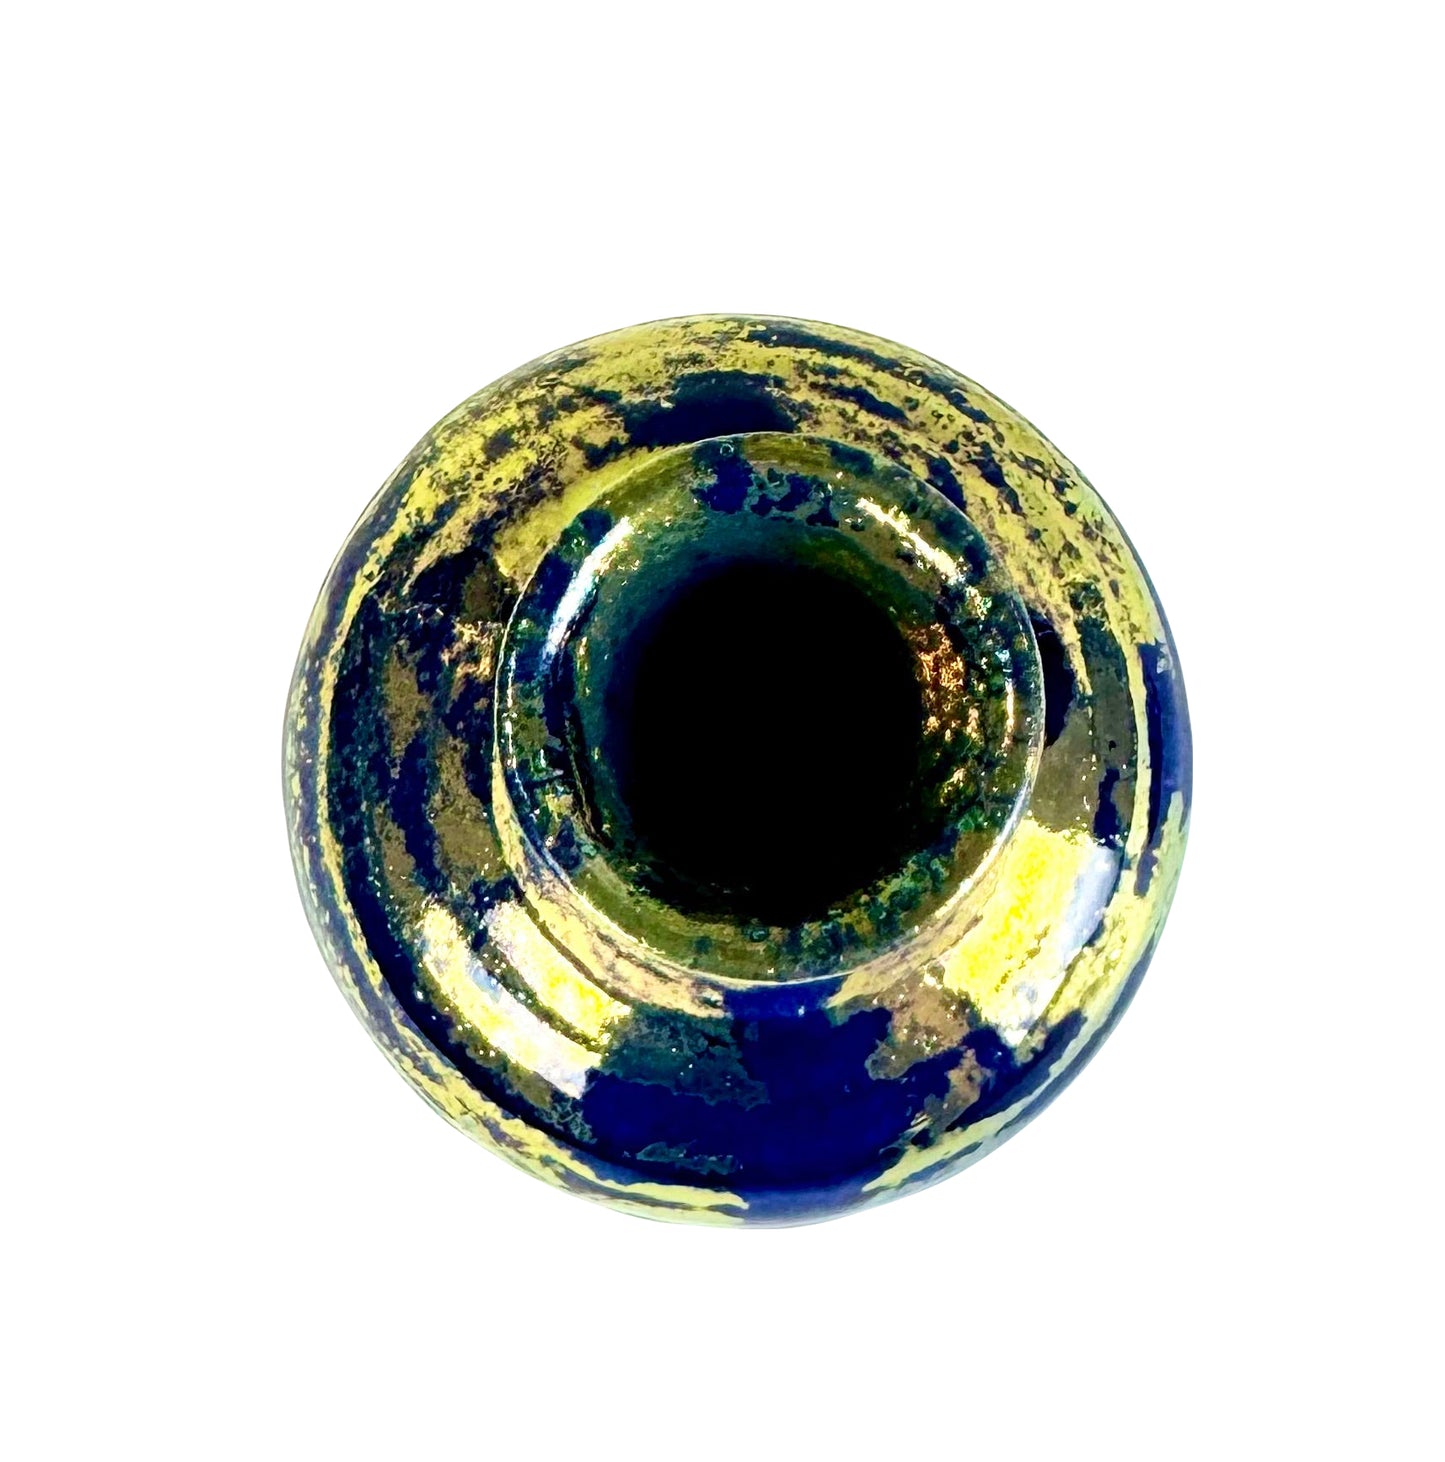 Cobalt and Gold Reticulated Luster Glaze Vase